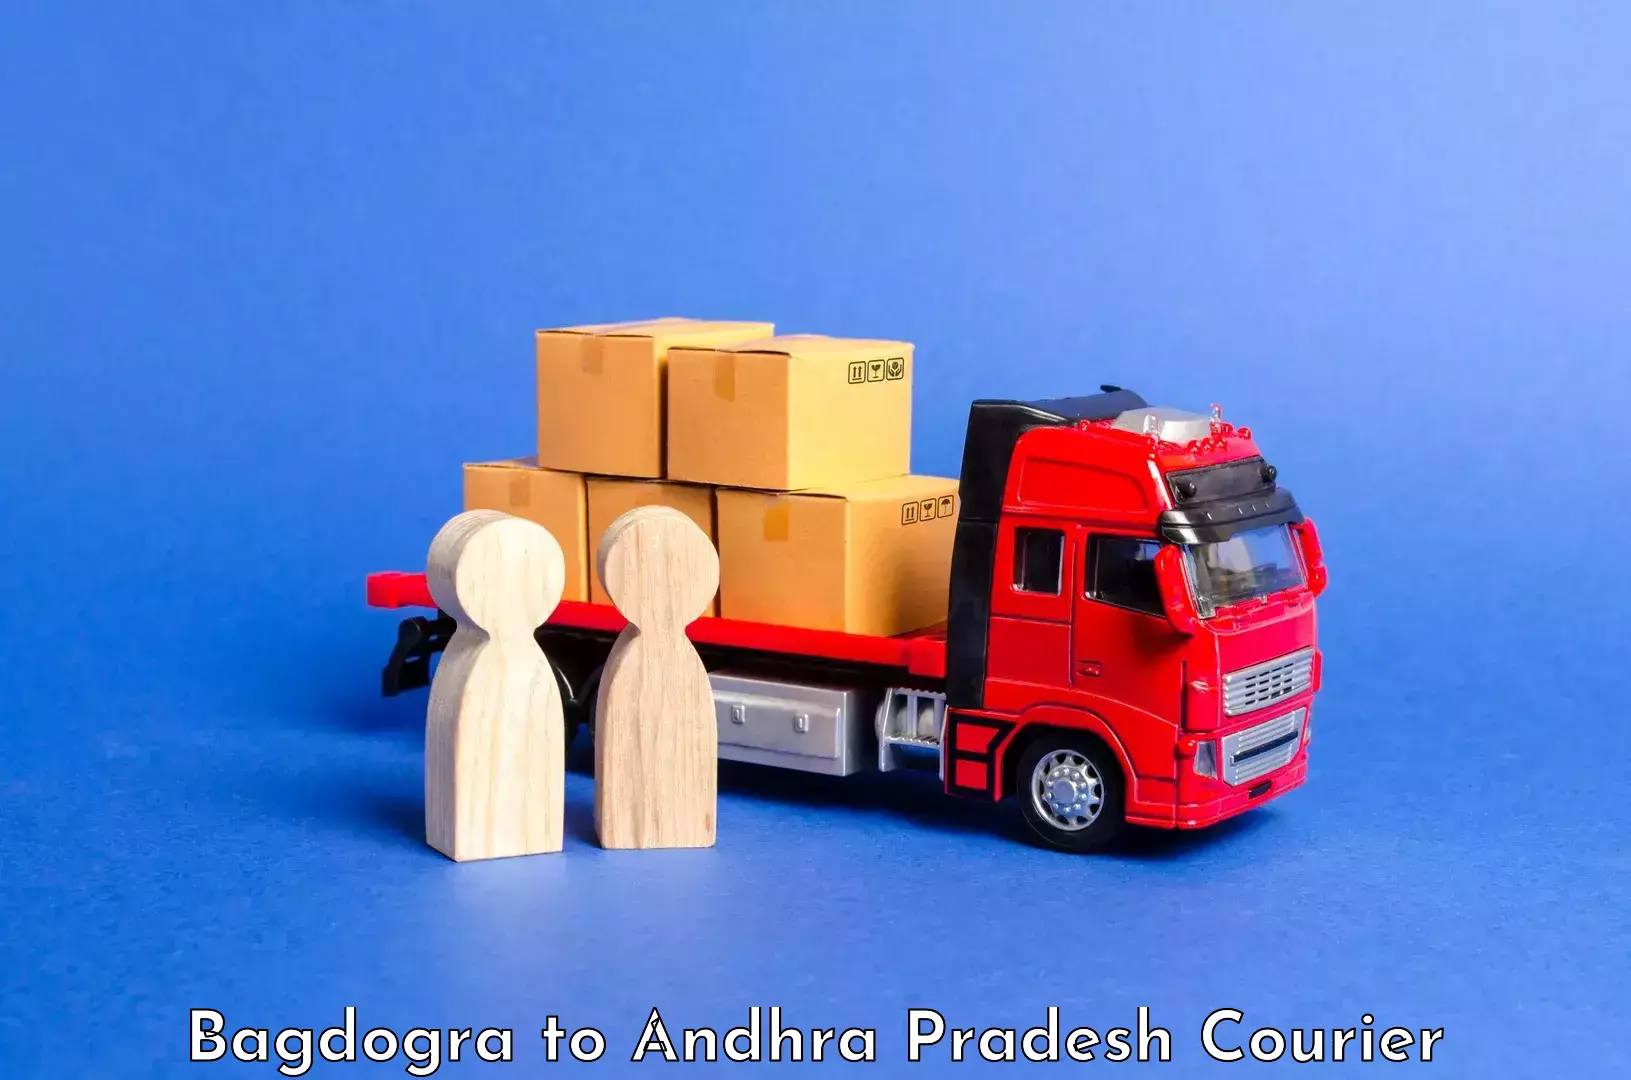 Baggage courier FAQs Bagdogra to Tripuranthakam